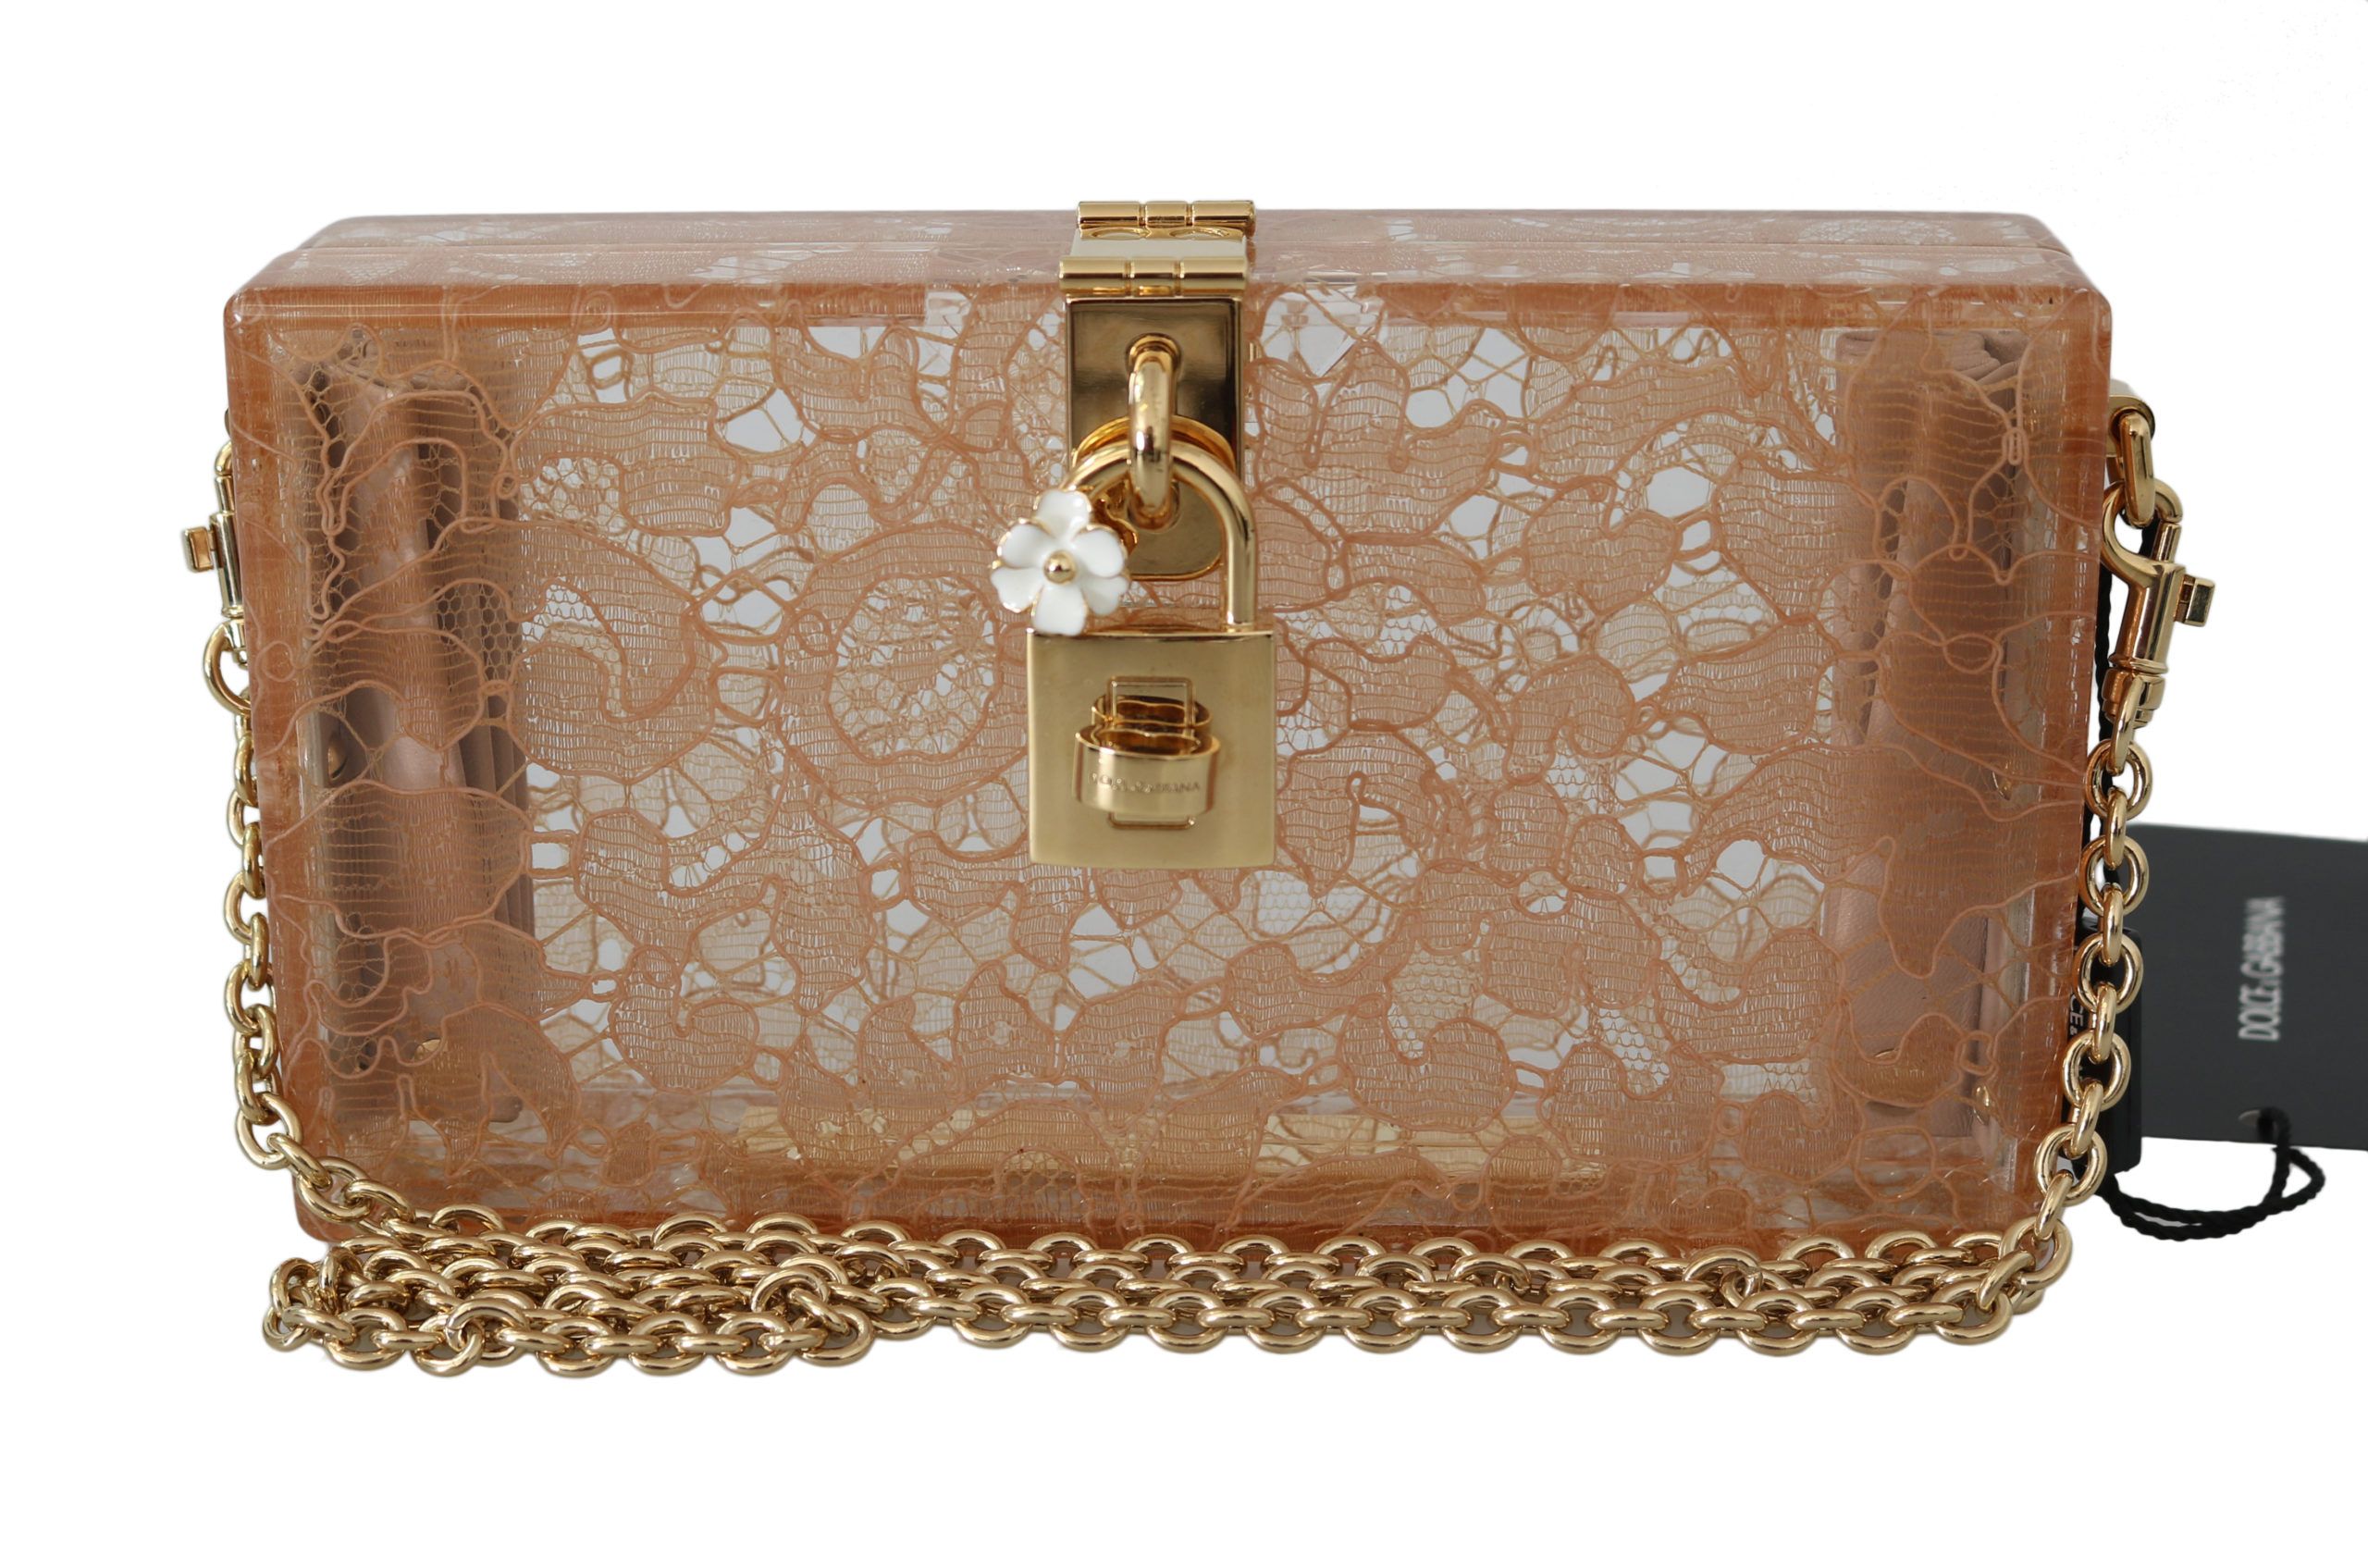 Factureerbaar geeuwen Il Dolce & Gabbana dames handtas beige plexiglas Taormina Lace Clutch Borse  Bag BOX